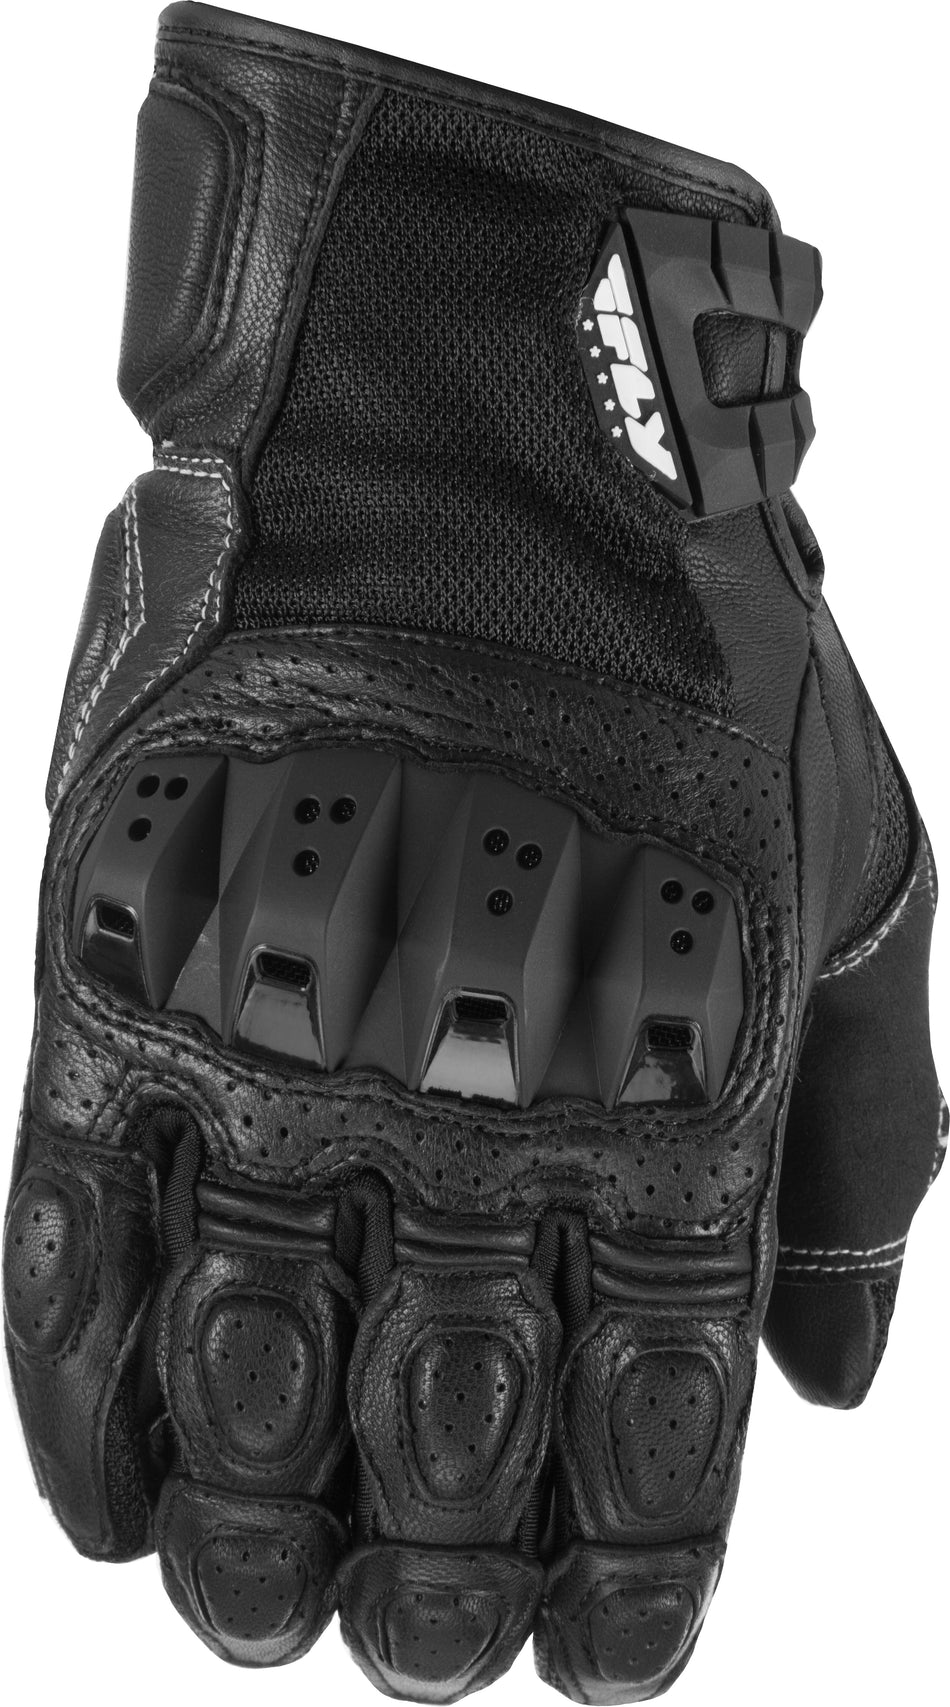 FLY RACING Brawler Gloves Black 2x #5884 476-2040~6